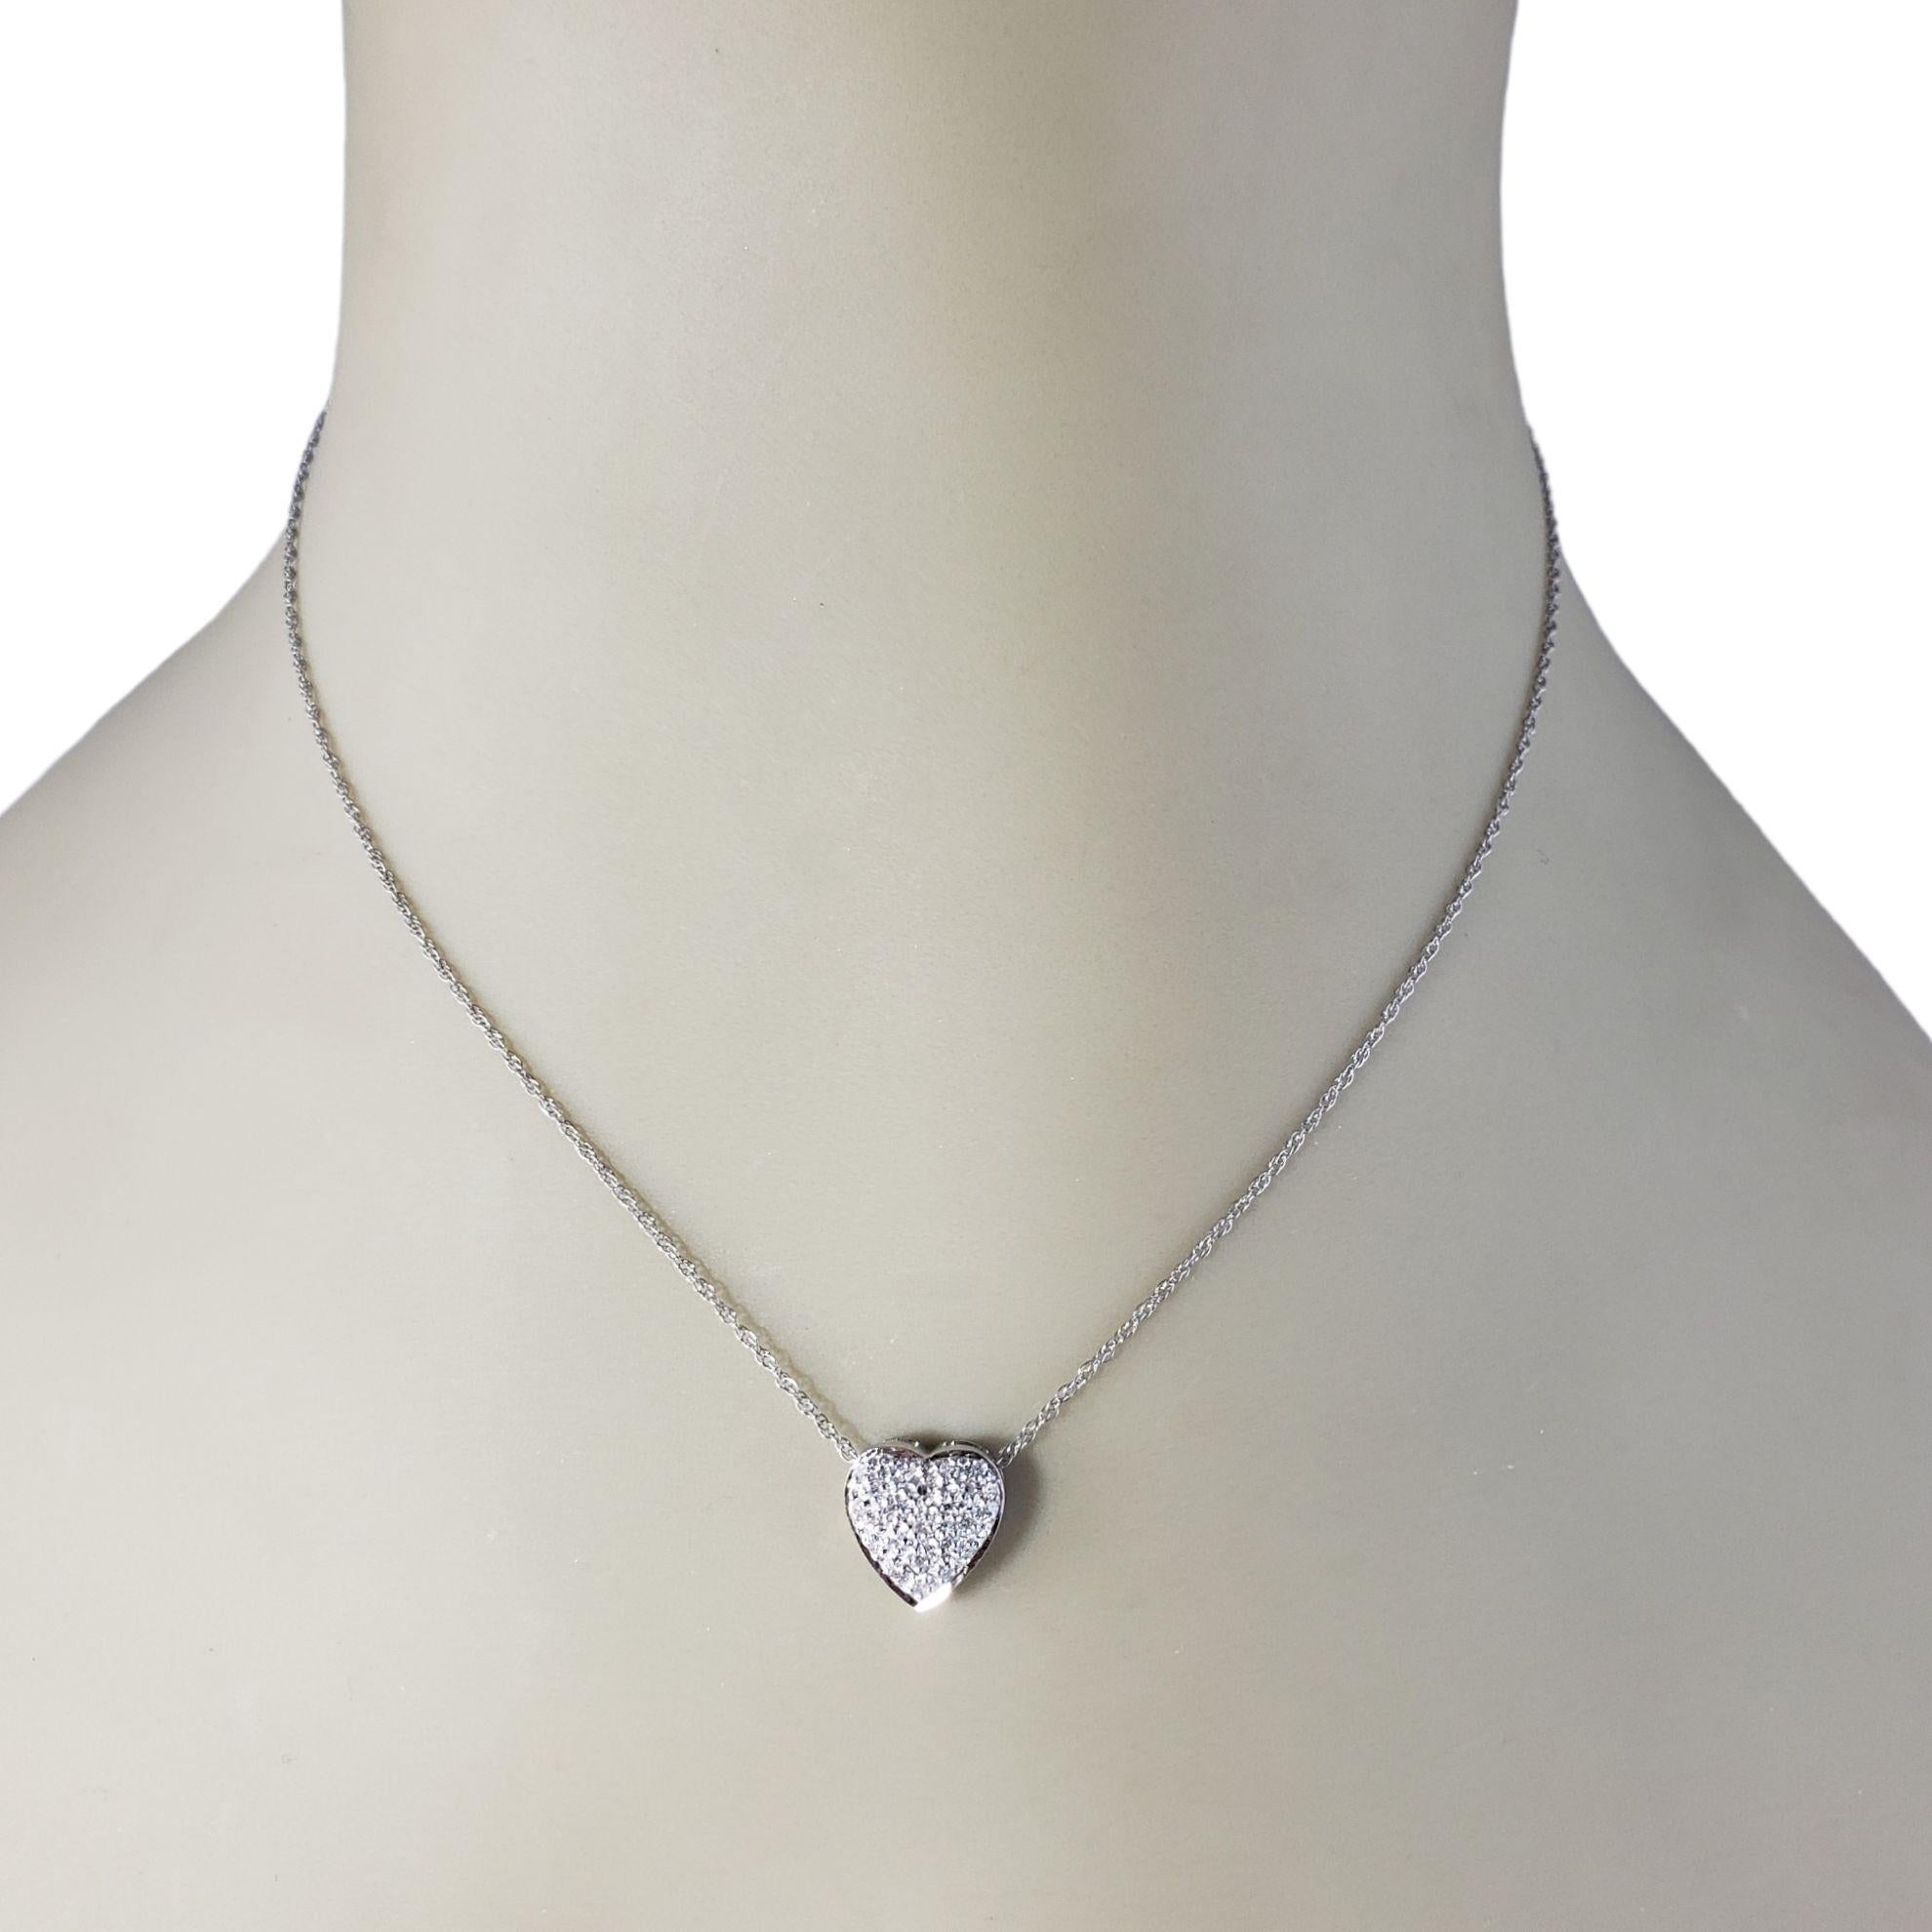 Vintage 14 Karat White Gold Diamond Heart Pendant Necklace #14916 For Sale 2